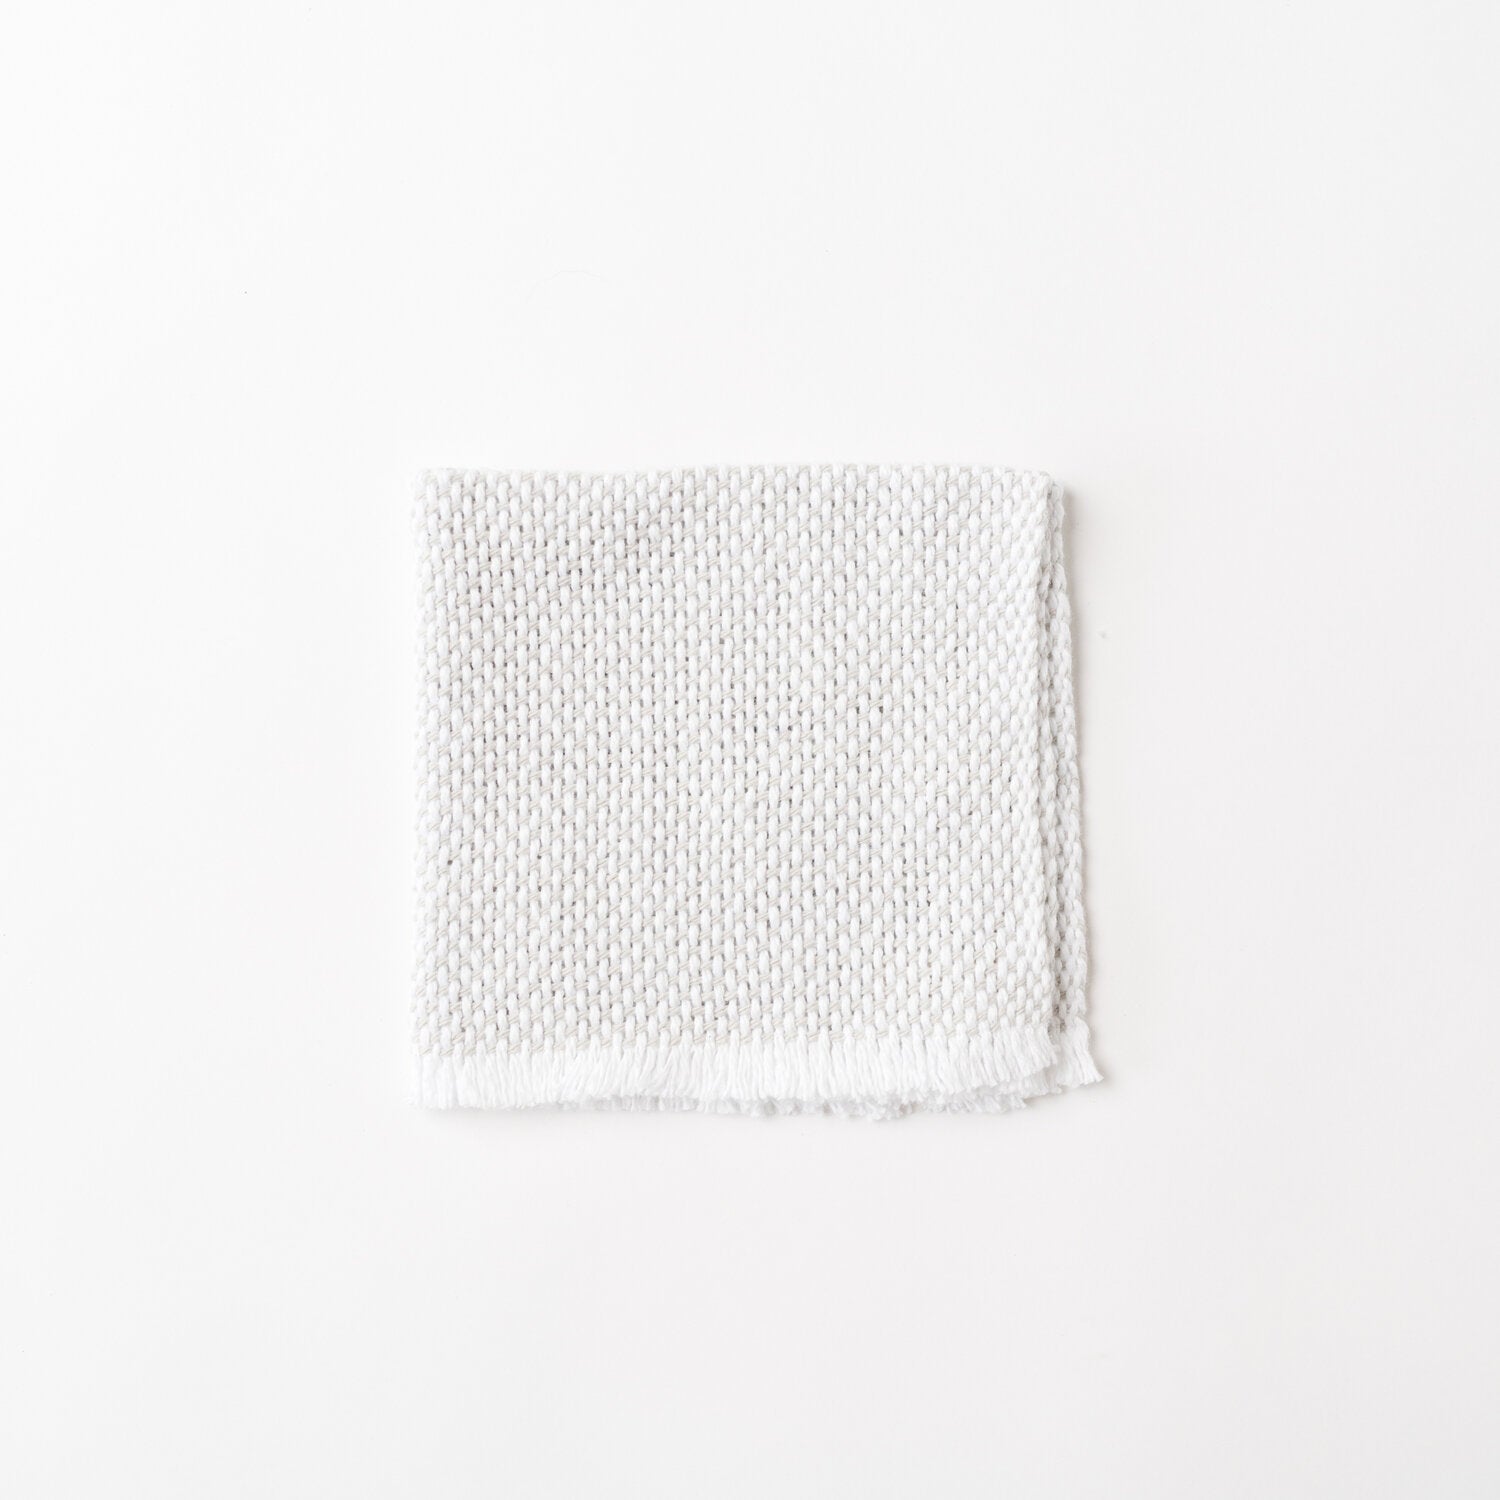 KD Weave Greige + White Wash Cloth, Set of 2